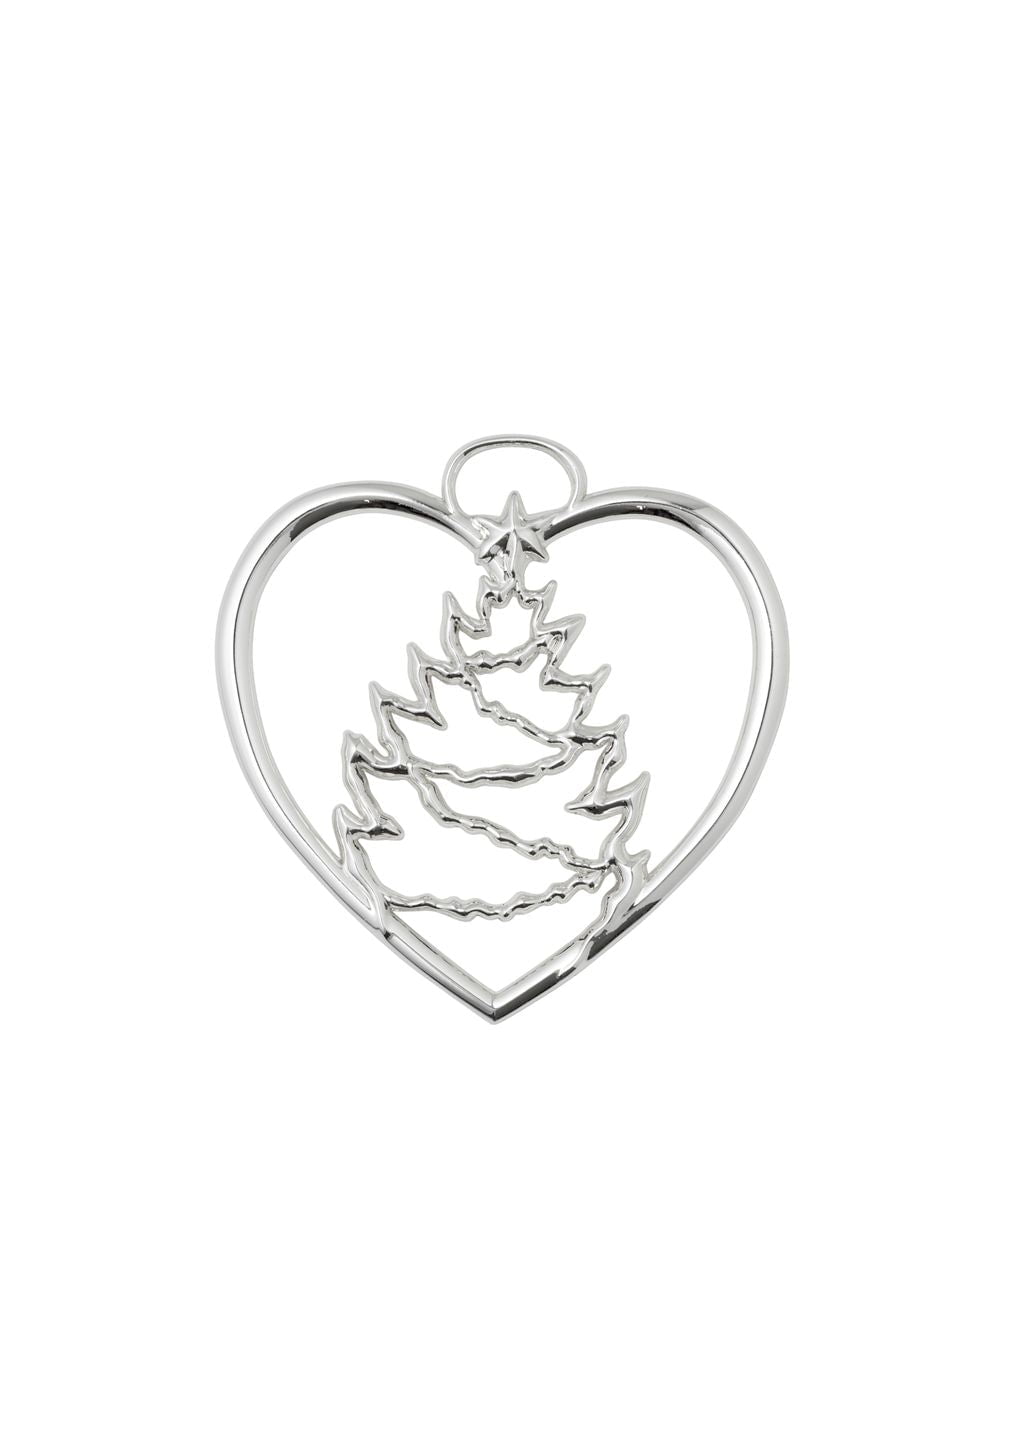 Rosendahl Karen Blixen Heart Christmas Tree H7.5 Cm, Silver Plated